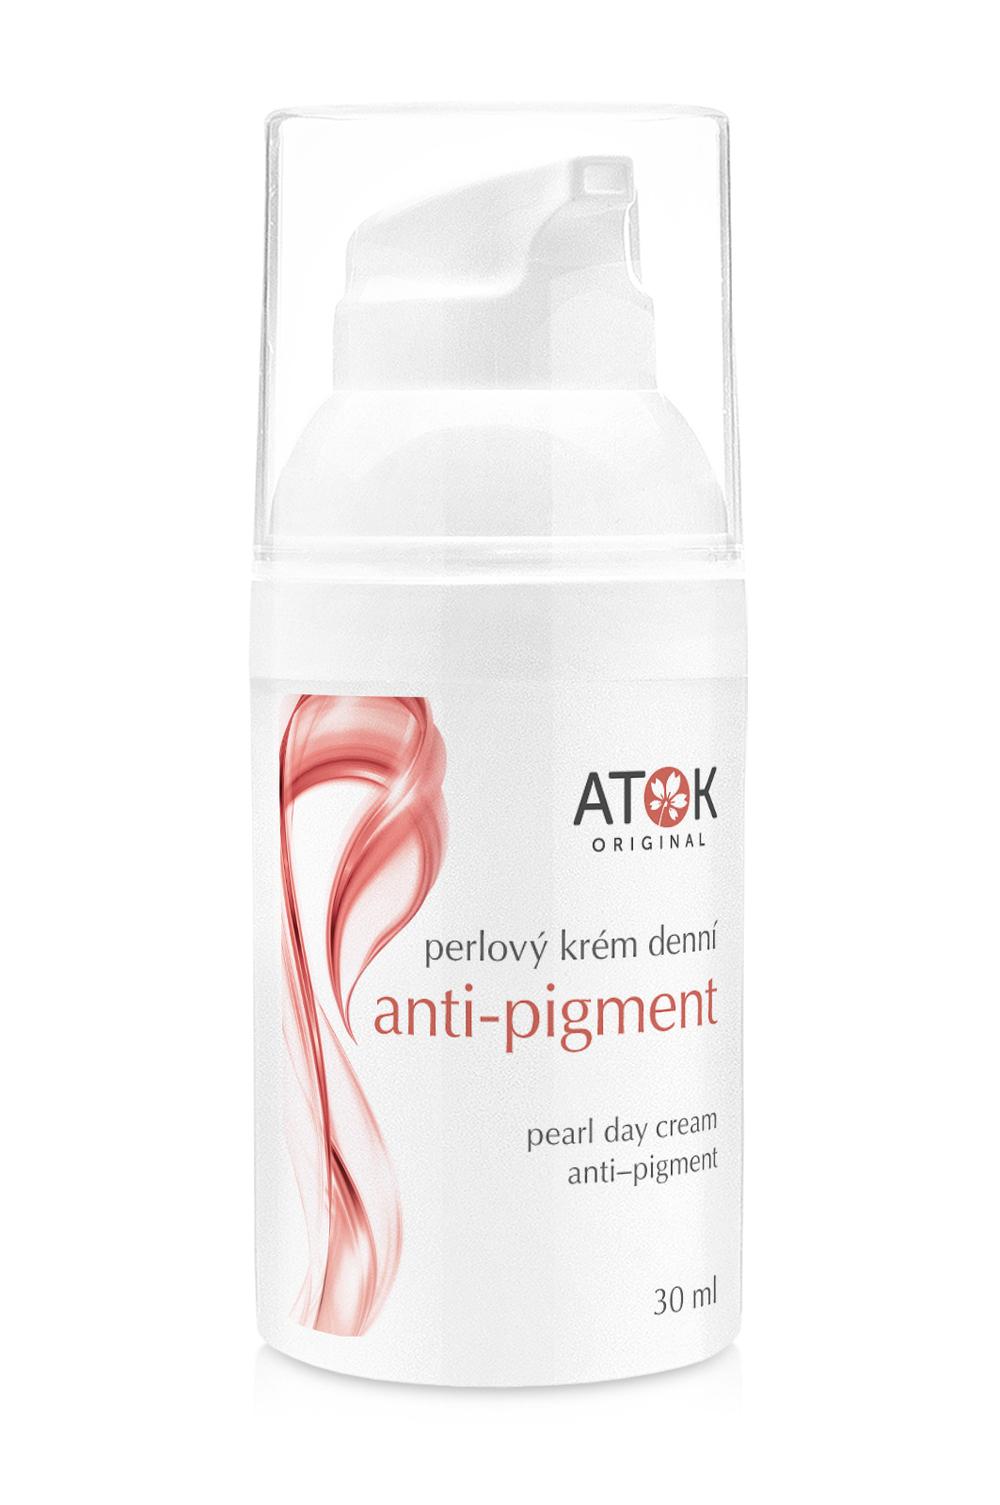 Perlový krém Anti-pigment denný - Original ATOK Obsah: 30 ml